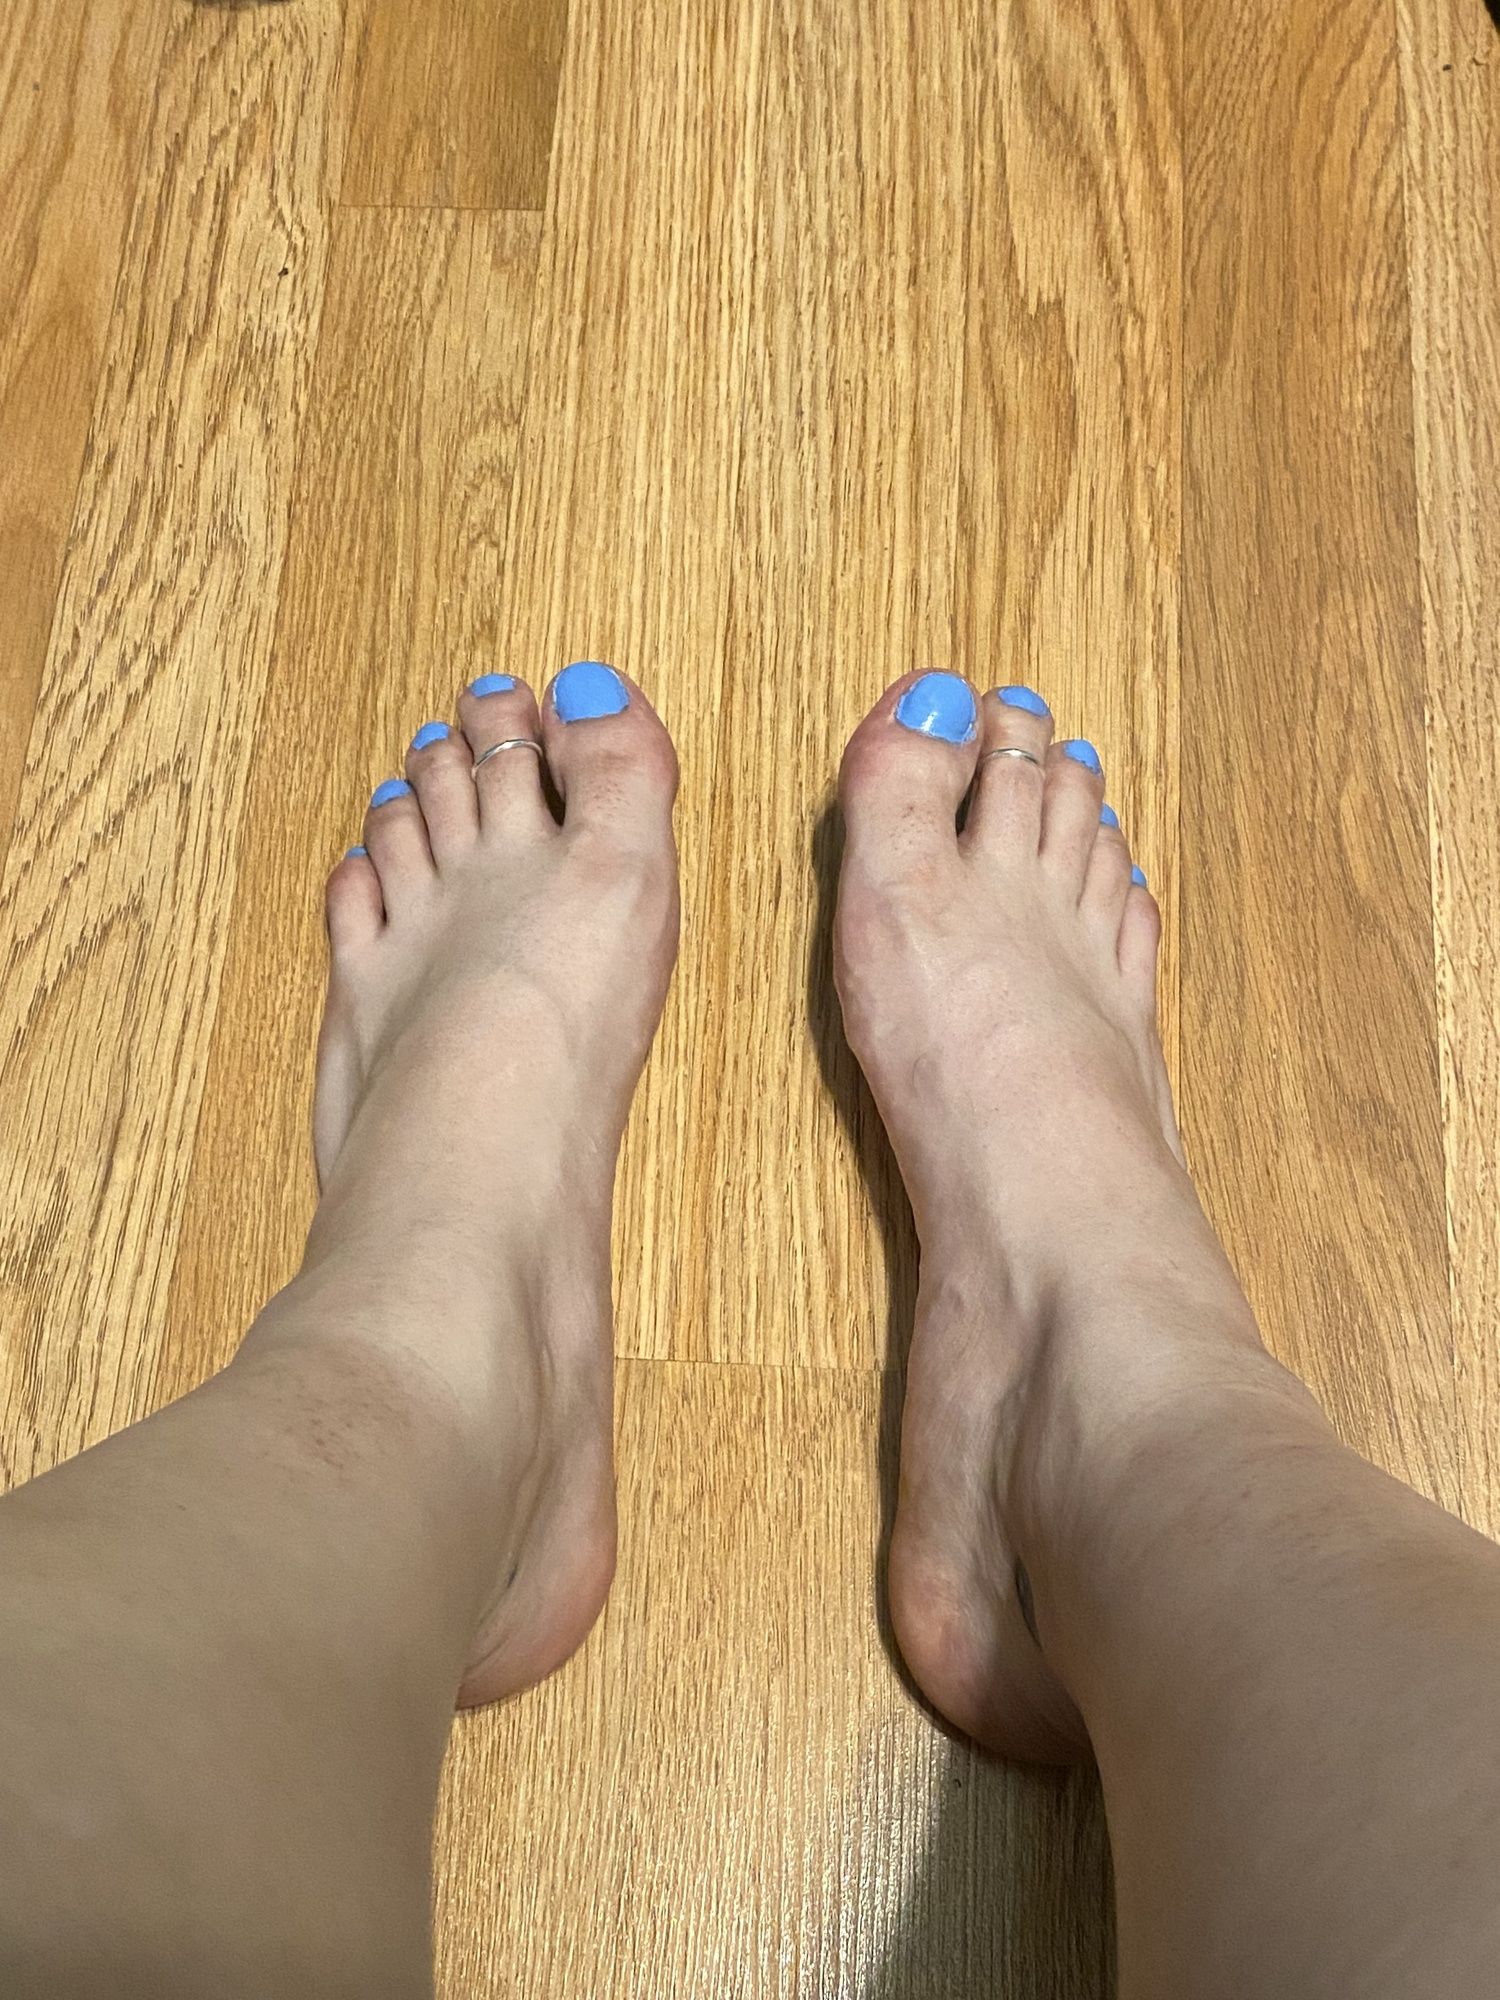 Pretty Feet and Toe Rings